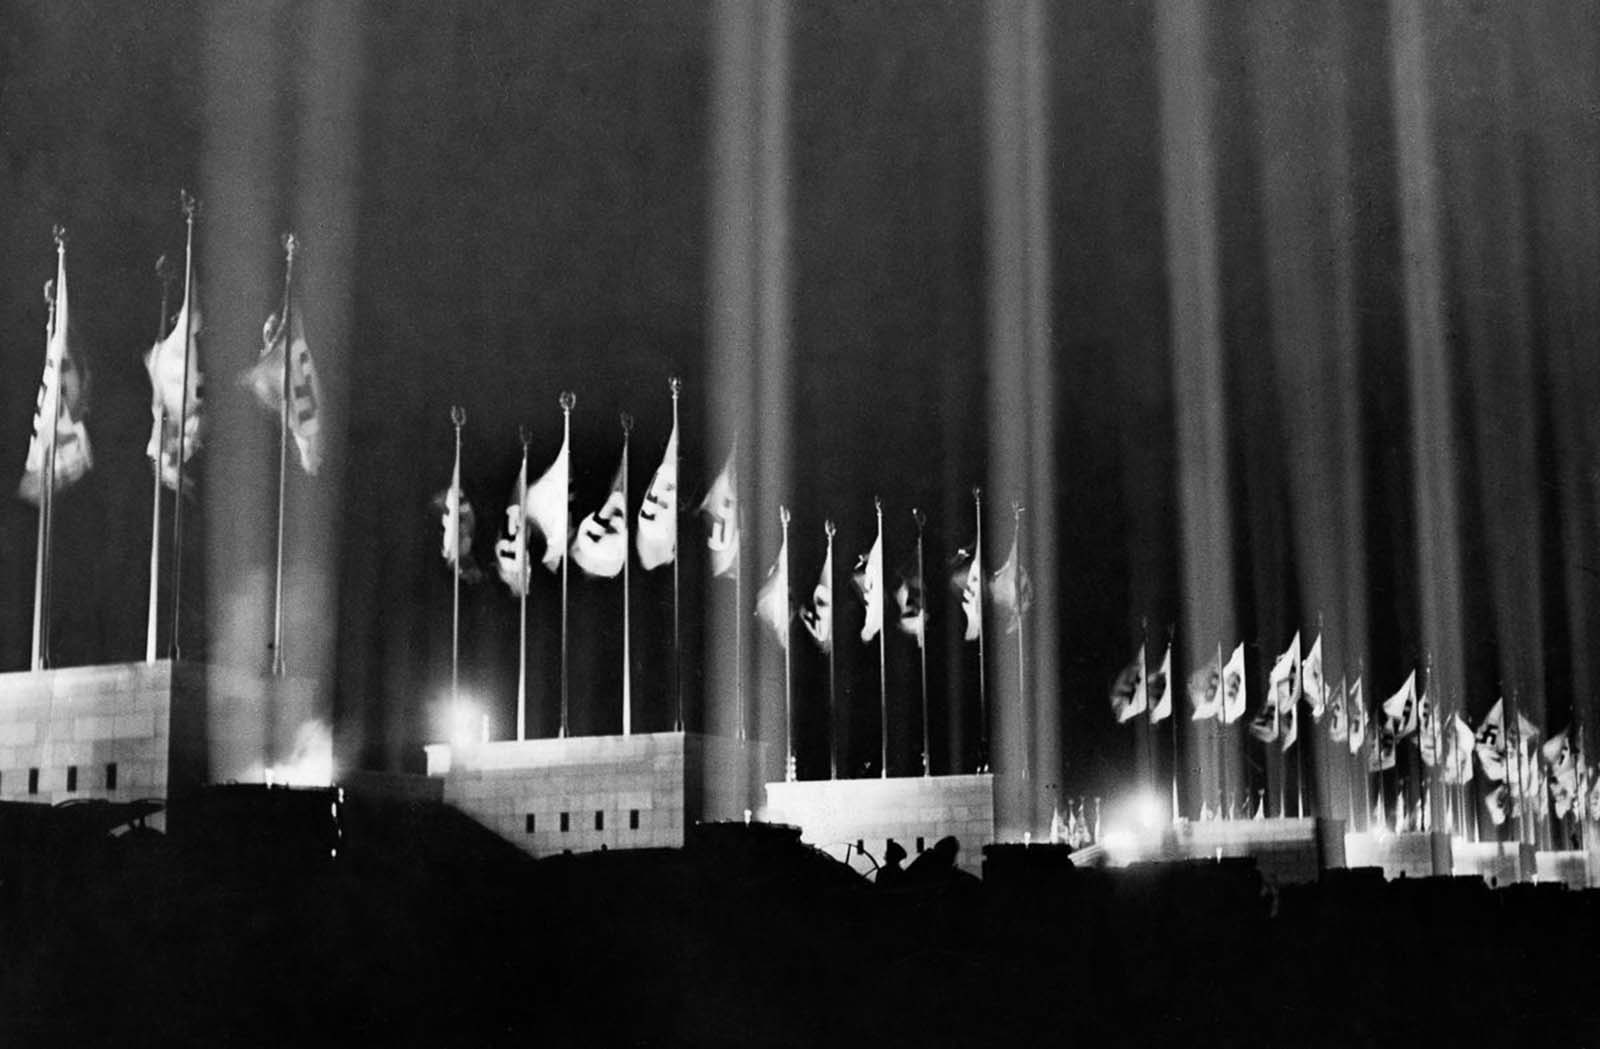 Nazi flags surrounding the venue. 1936.